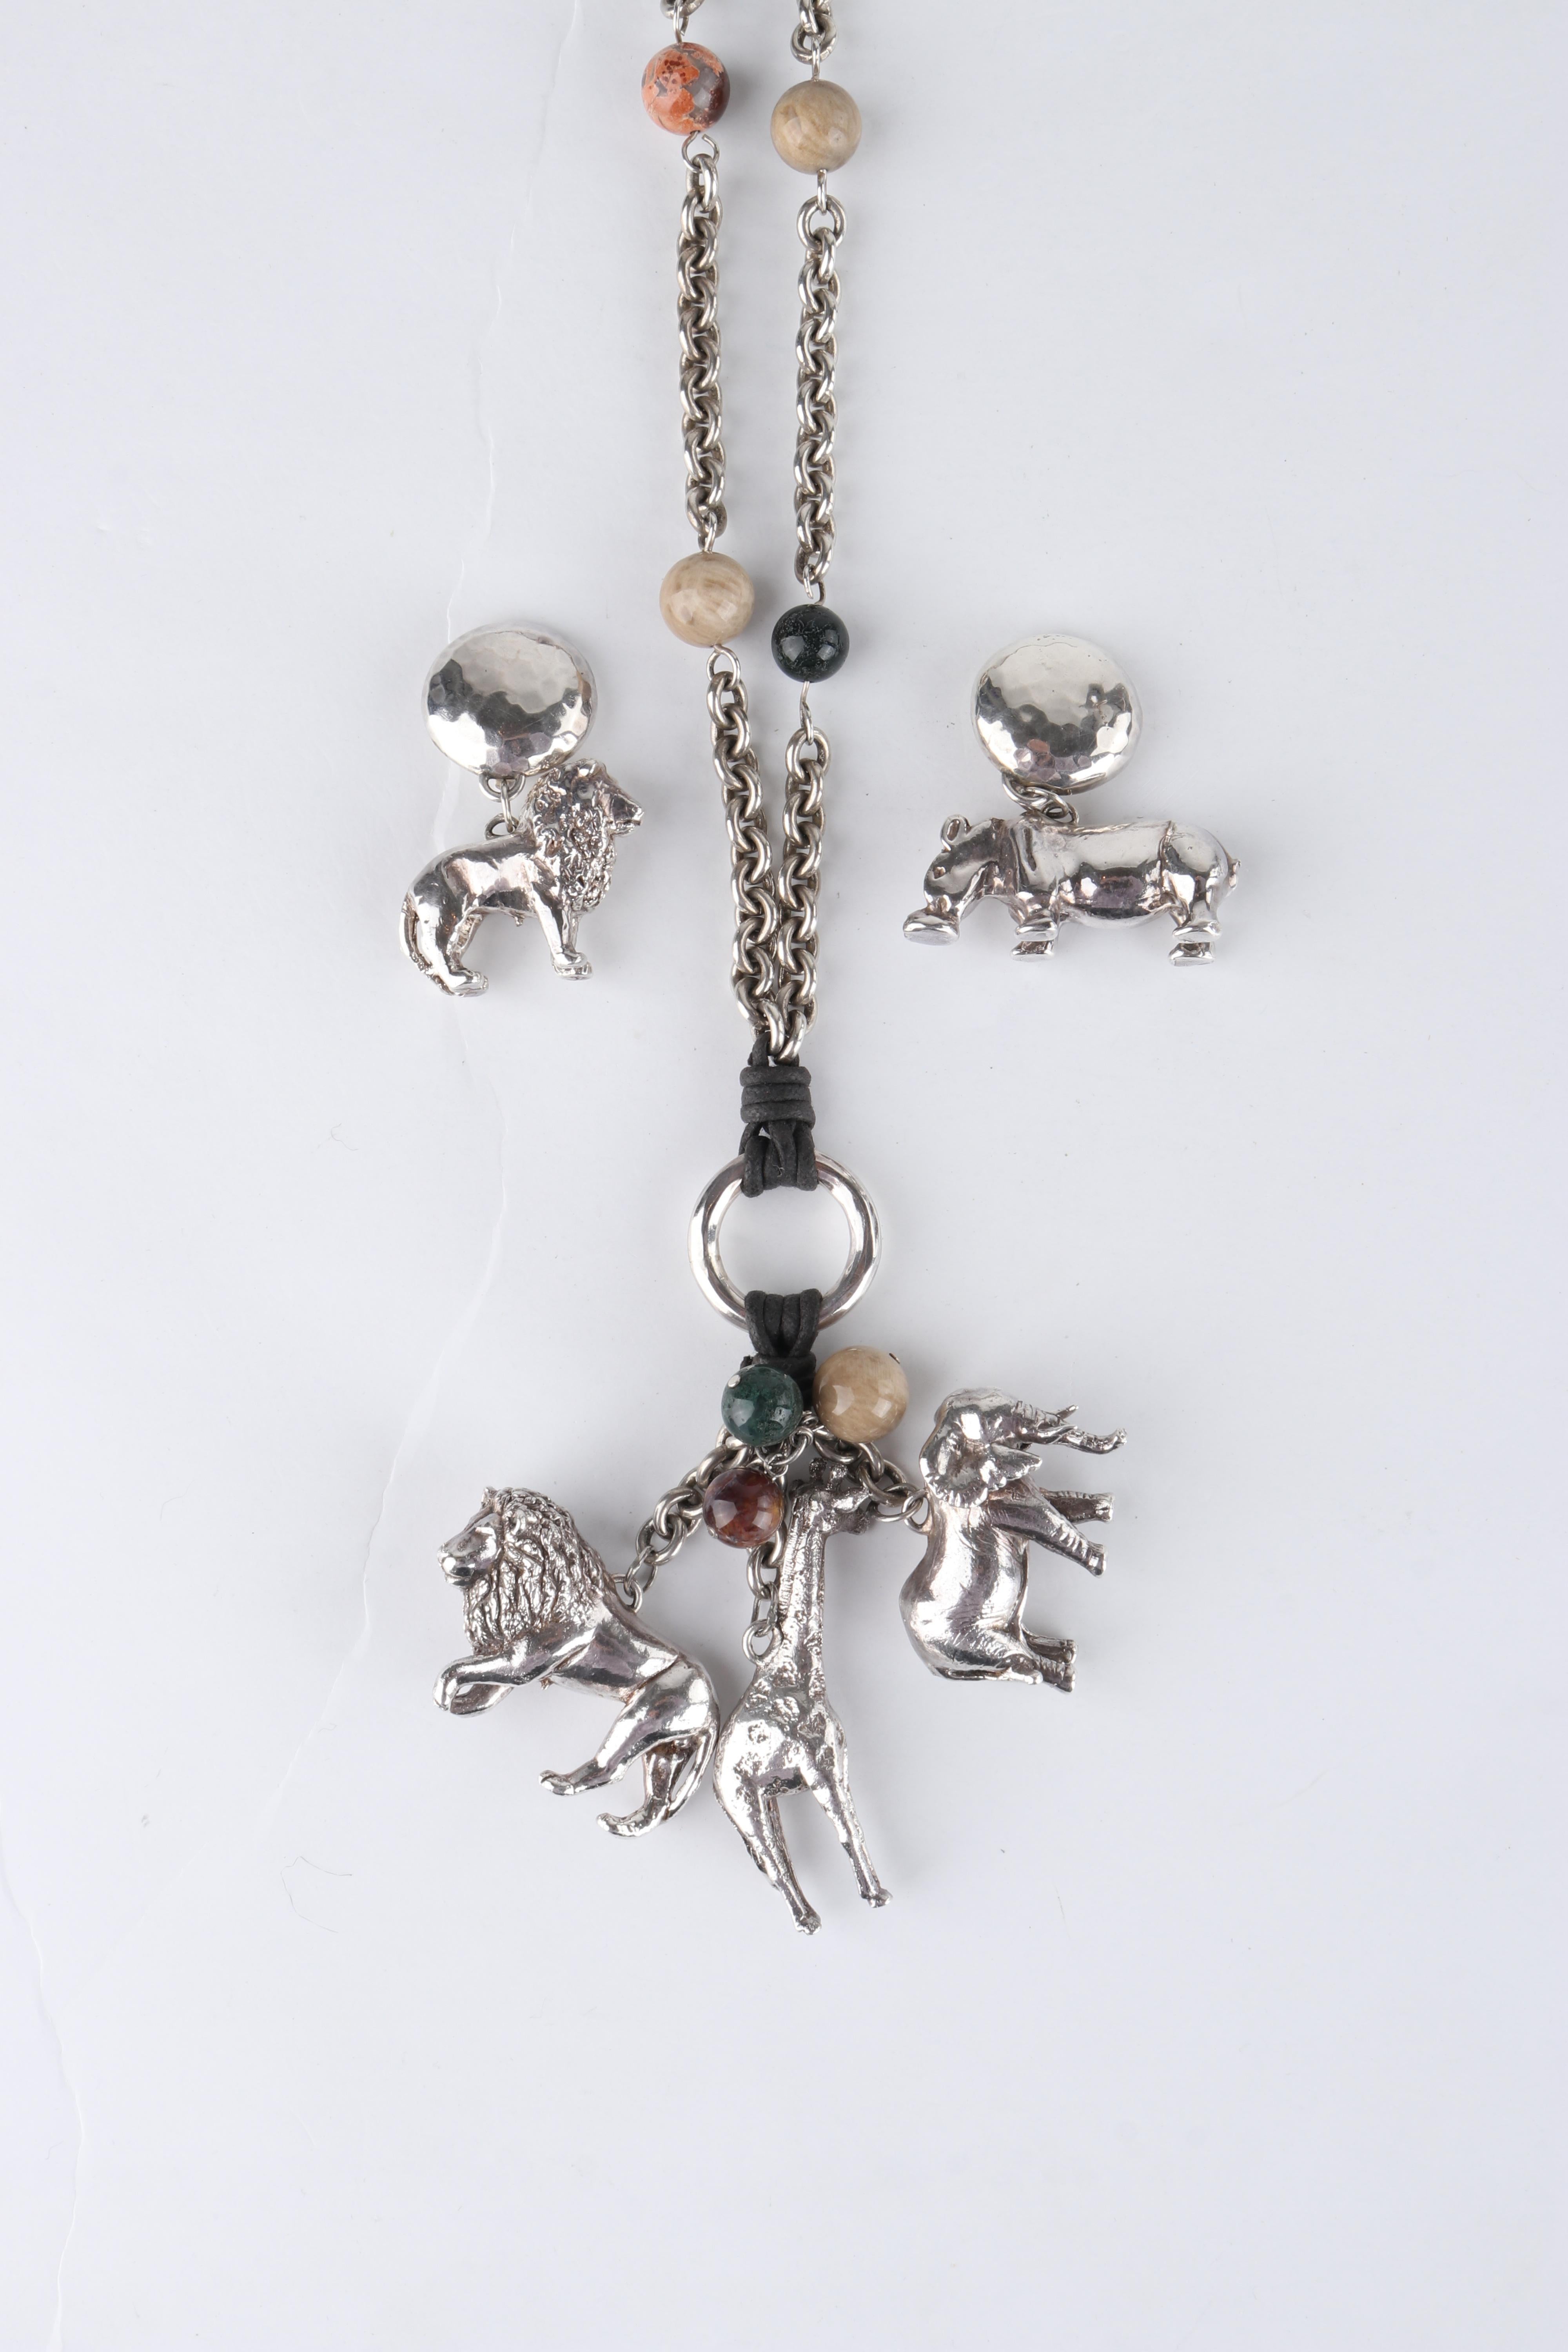 SUSAN CUMMINGS c.1990's Vtg Sterling Silver Beaded Animal Necklace Earrings Set

Brand / Manufacturer: Susan Cummings
Circa: 1990's 